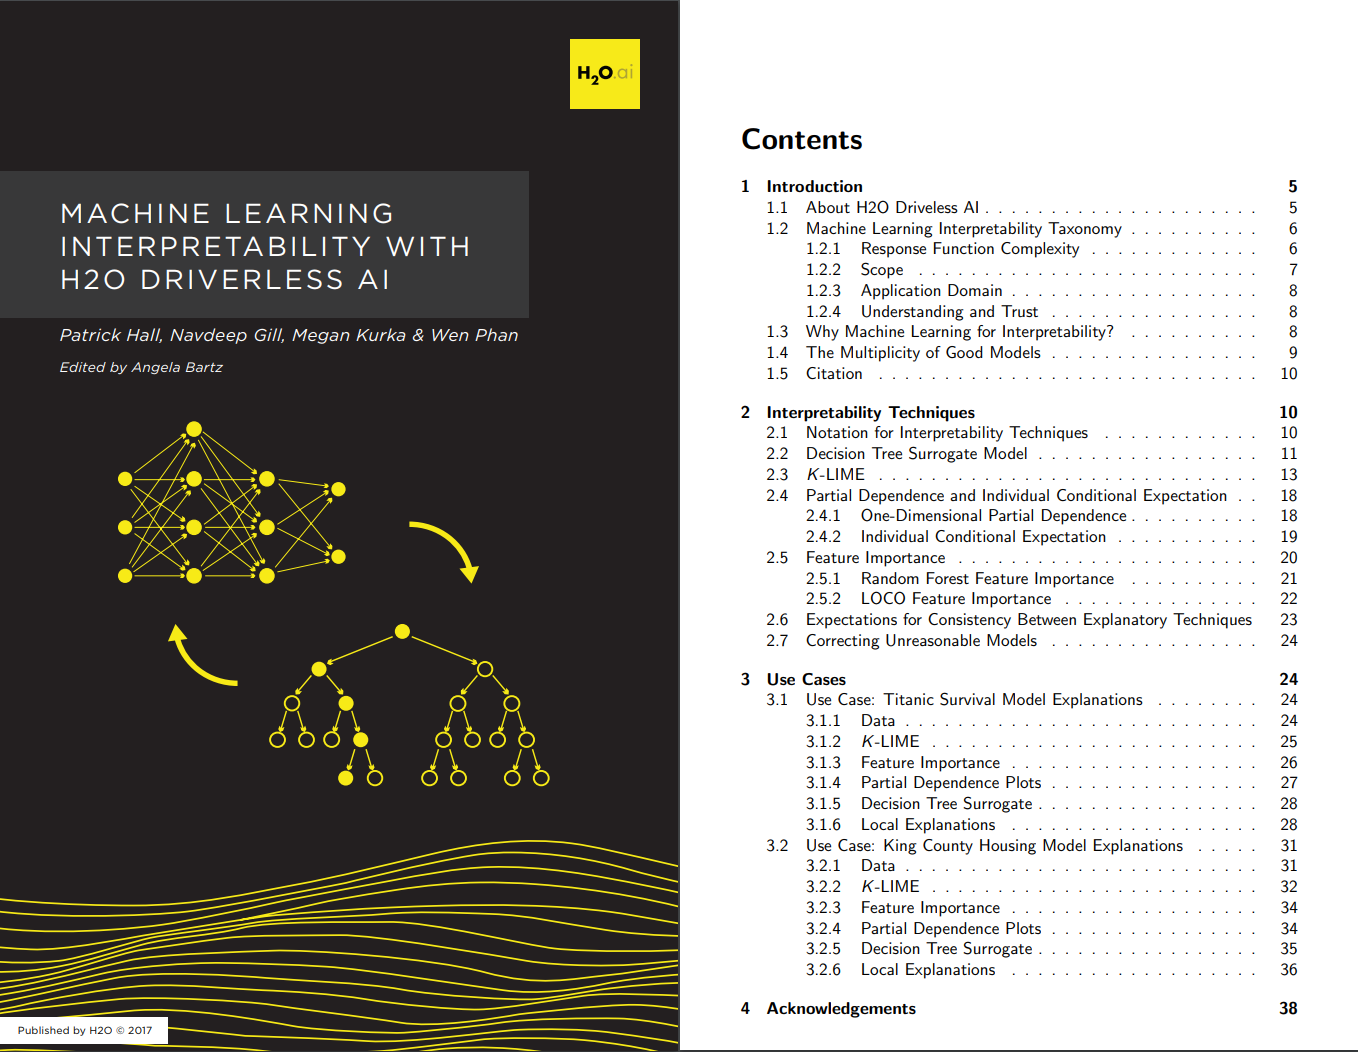 Machine Learning Interpretability with H2O Driverless AI (MLI) booklet